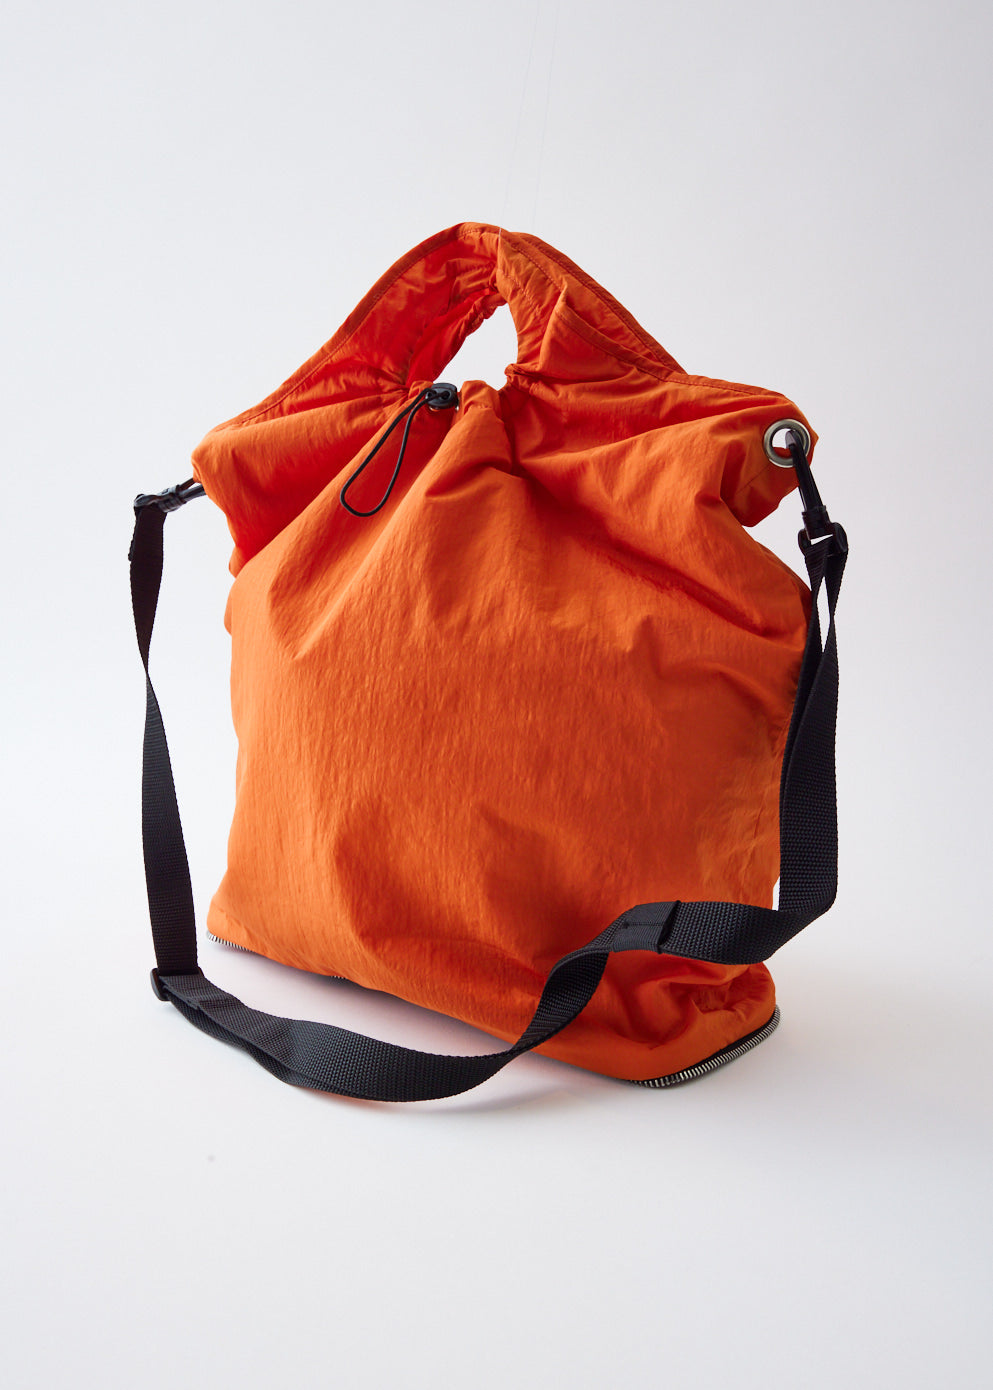 Packable Tote Bag